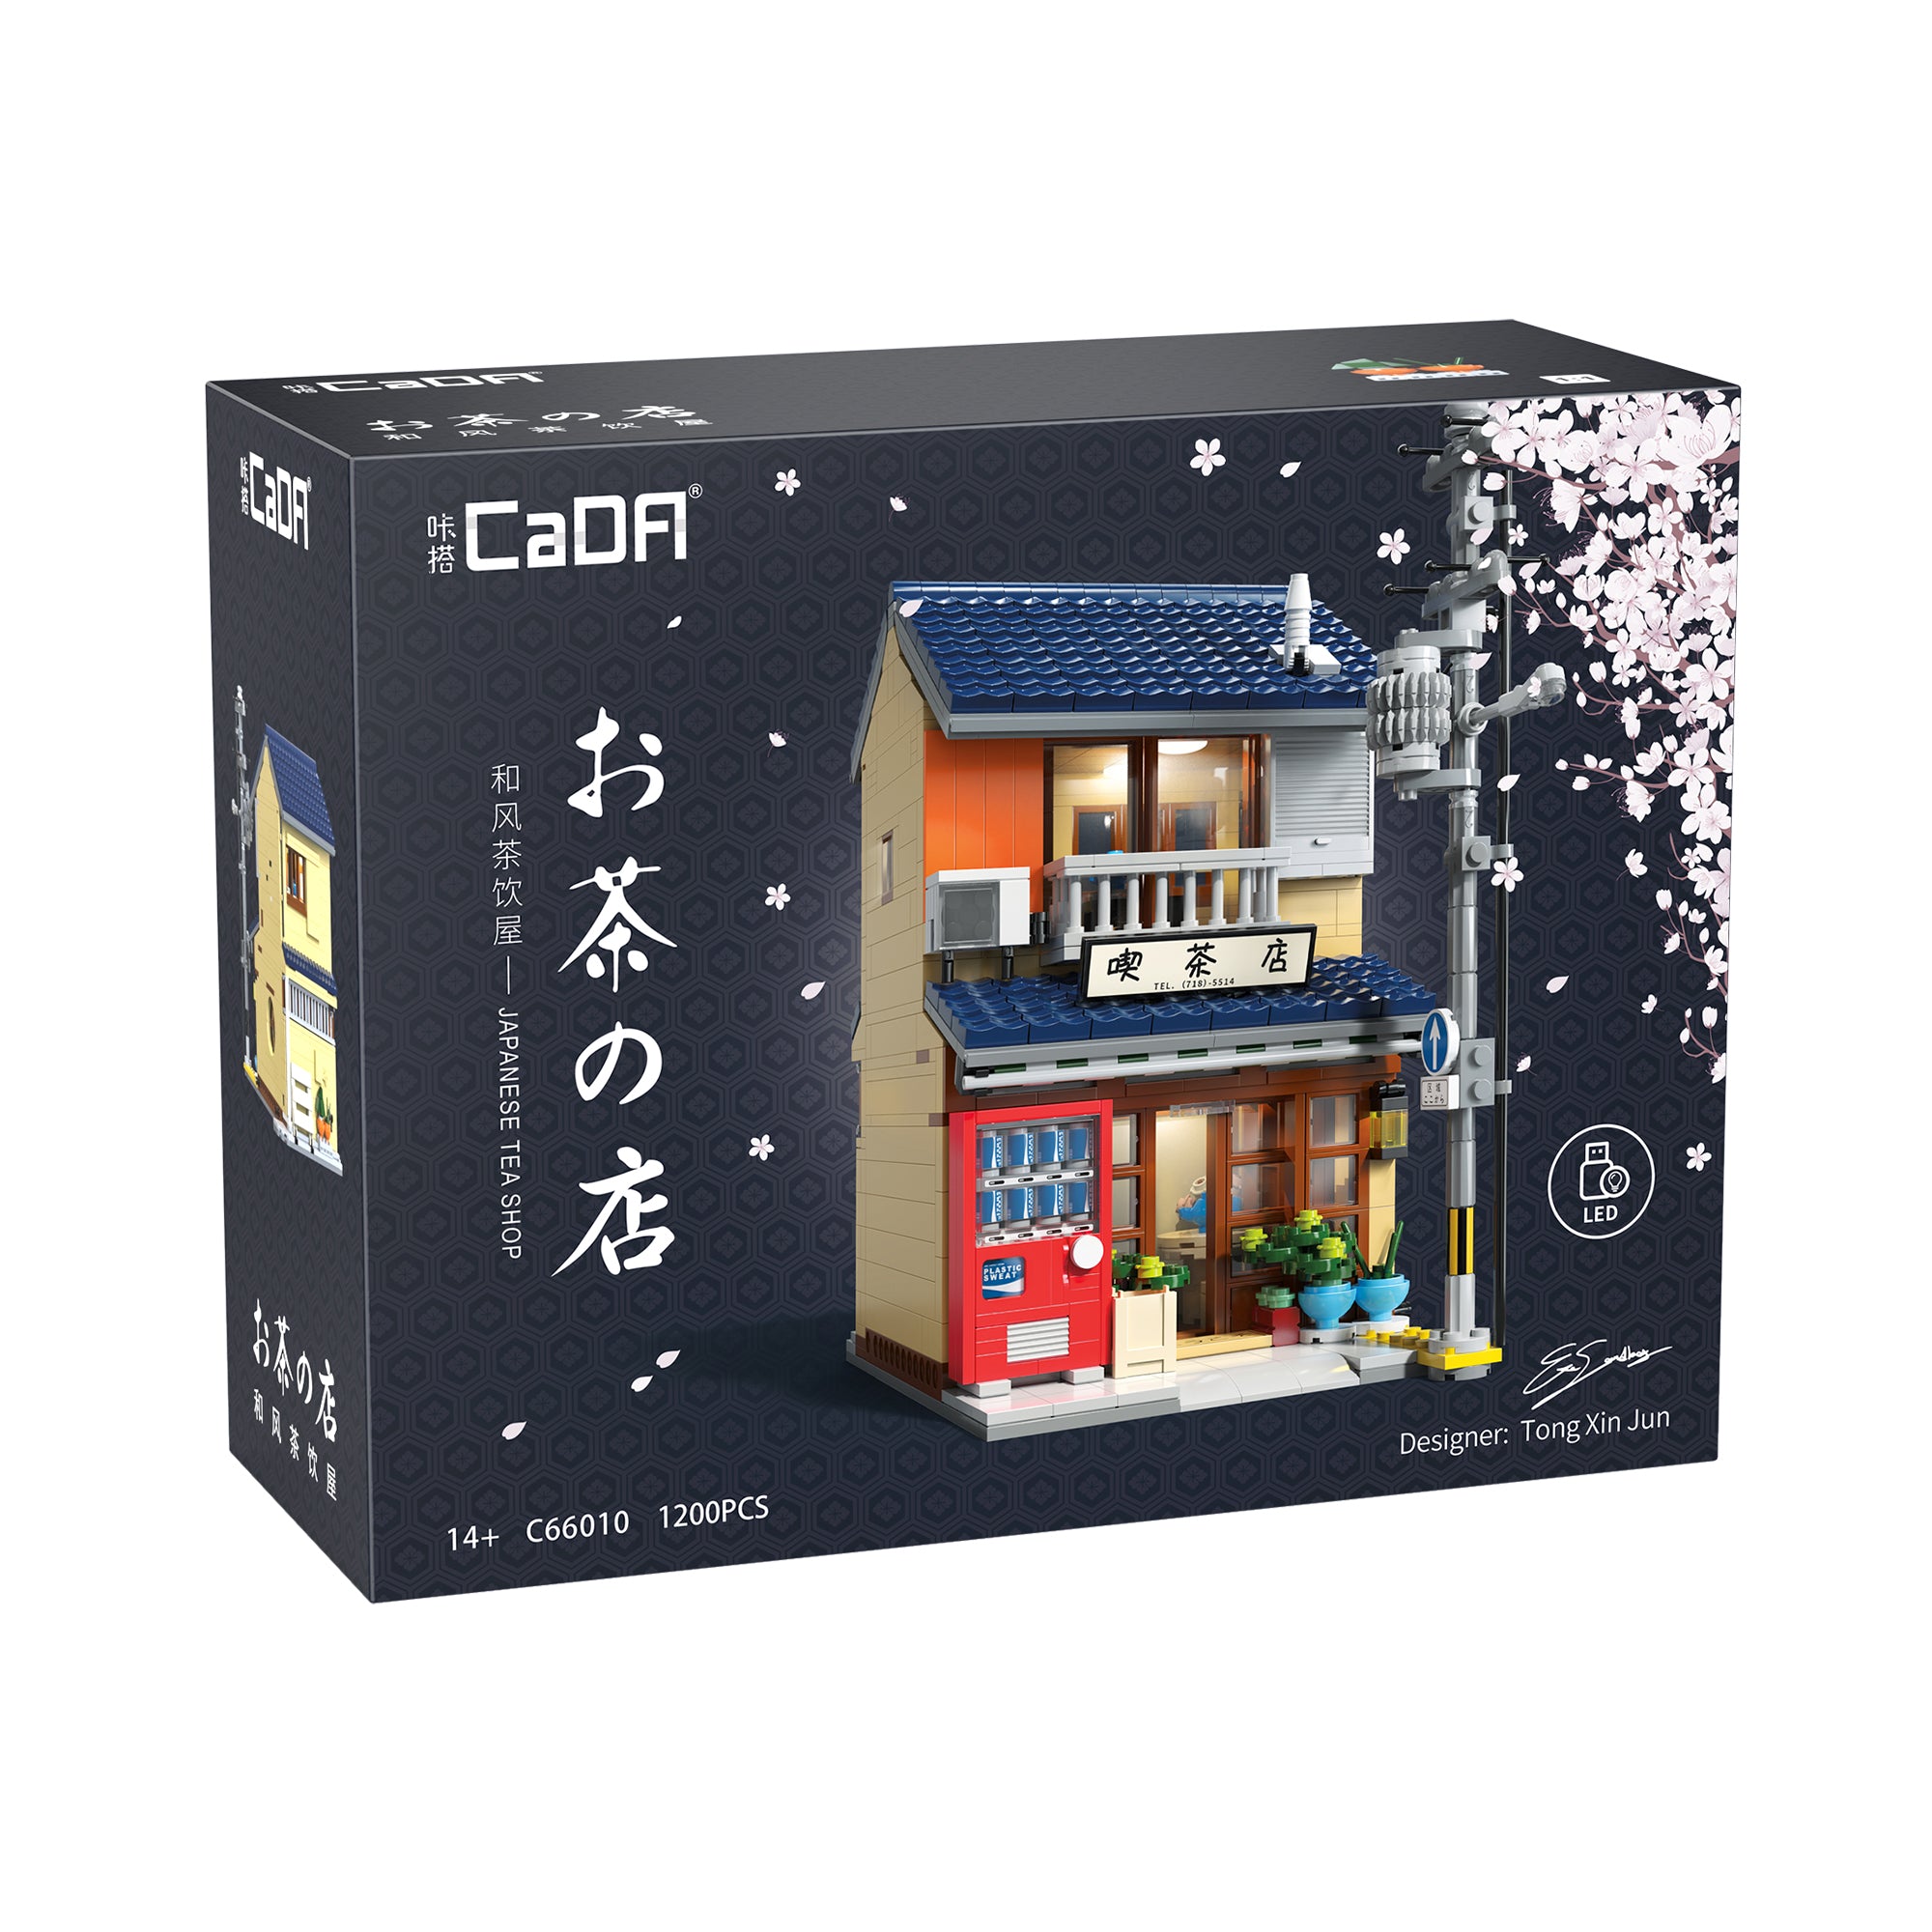 CaDA Japanese Kissaten Shop C66010W